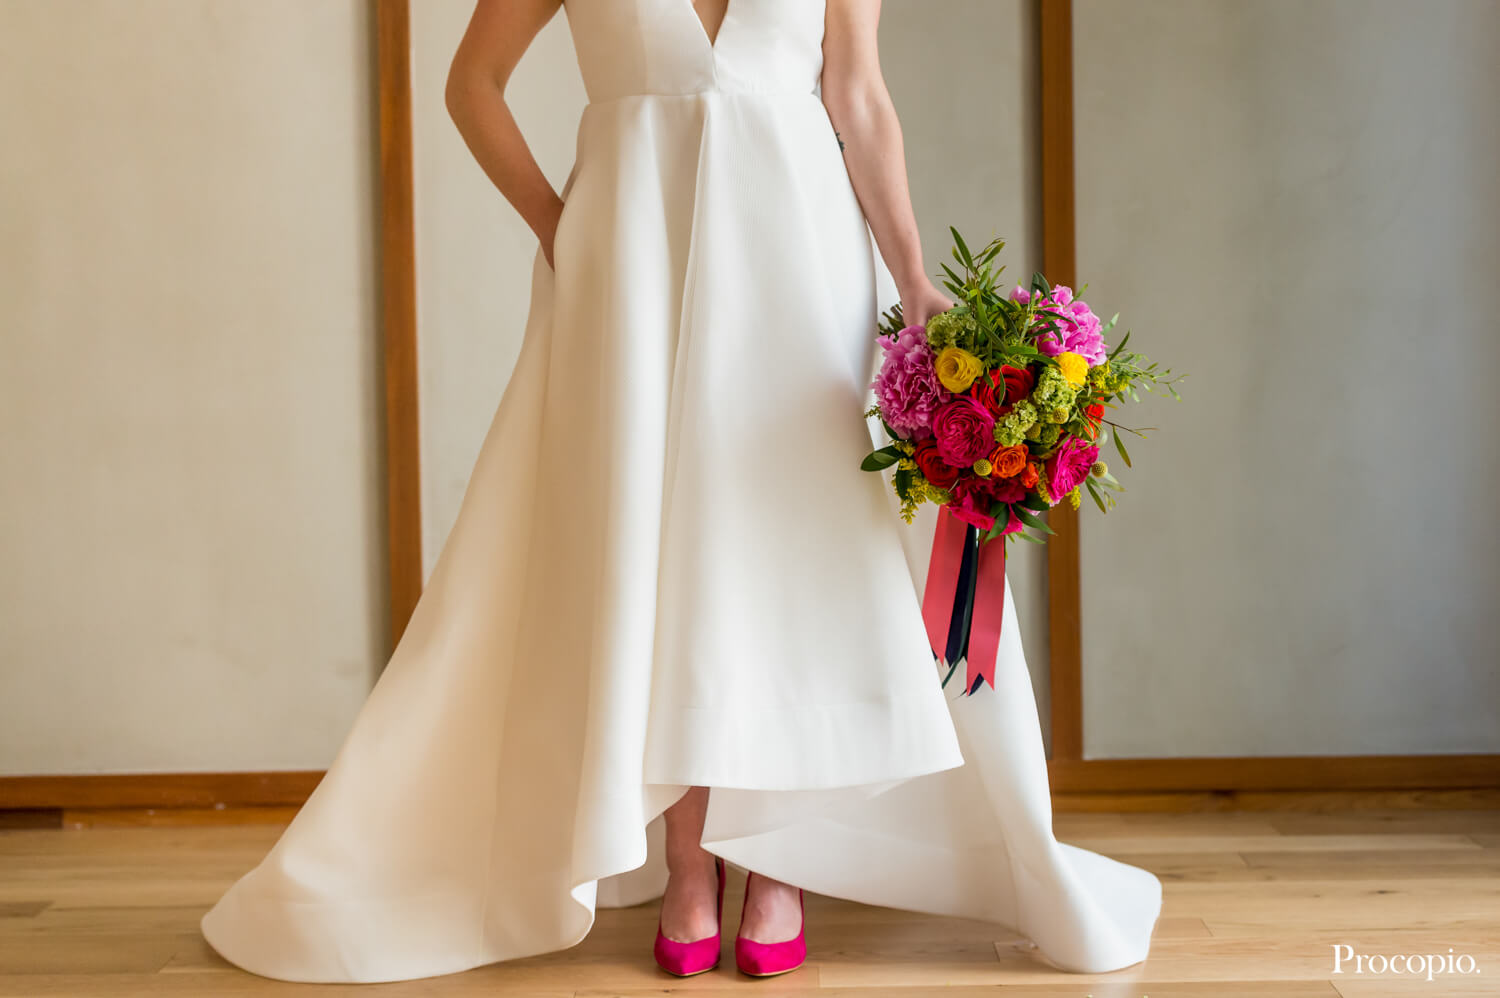 Bride holding bright bouquet, A.Dominick Events - best Washington DC wedding planner - photo by Procopio Photography